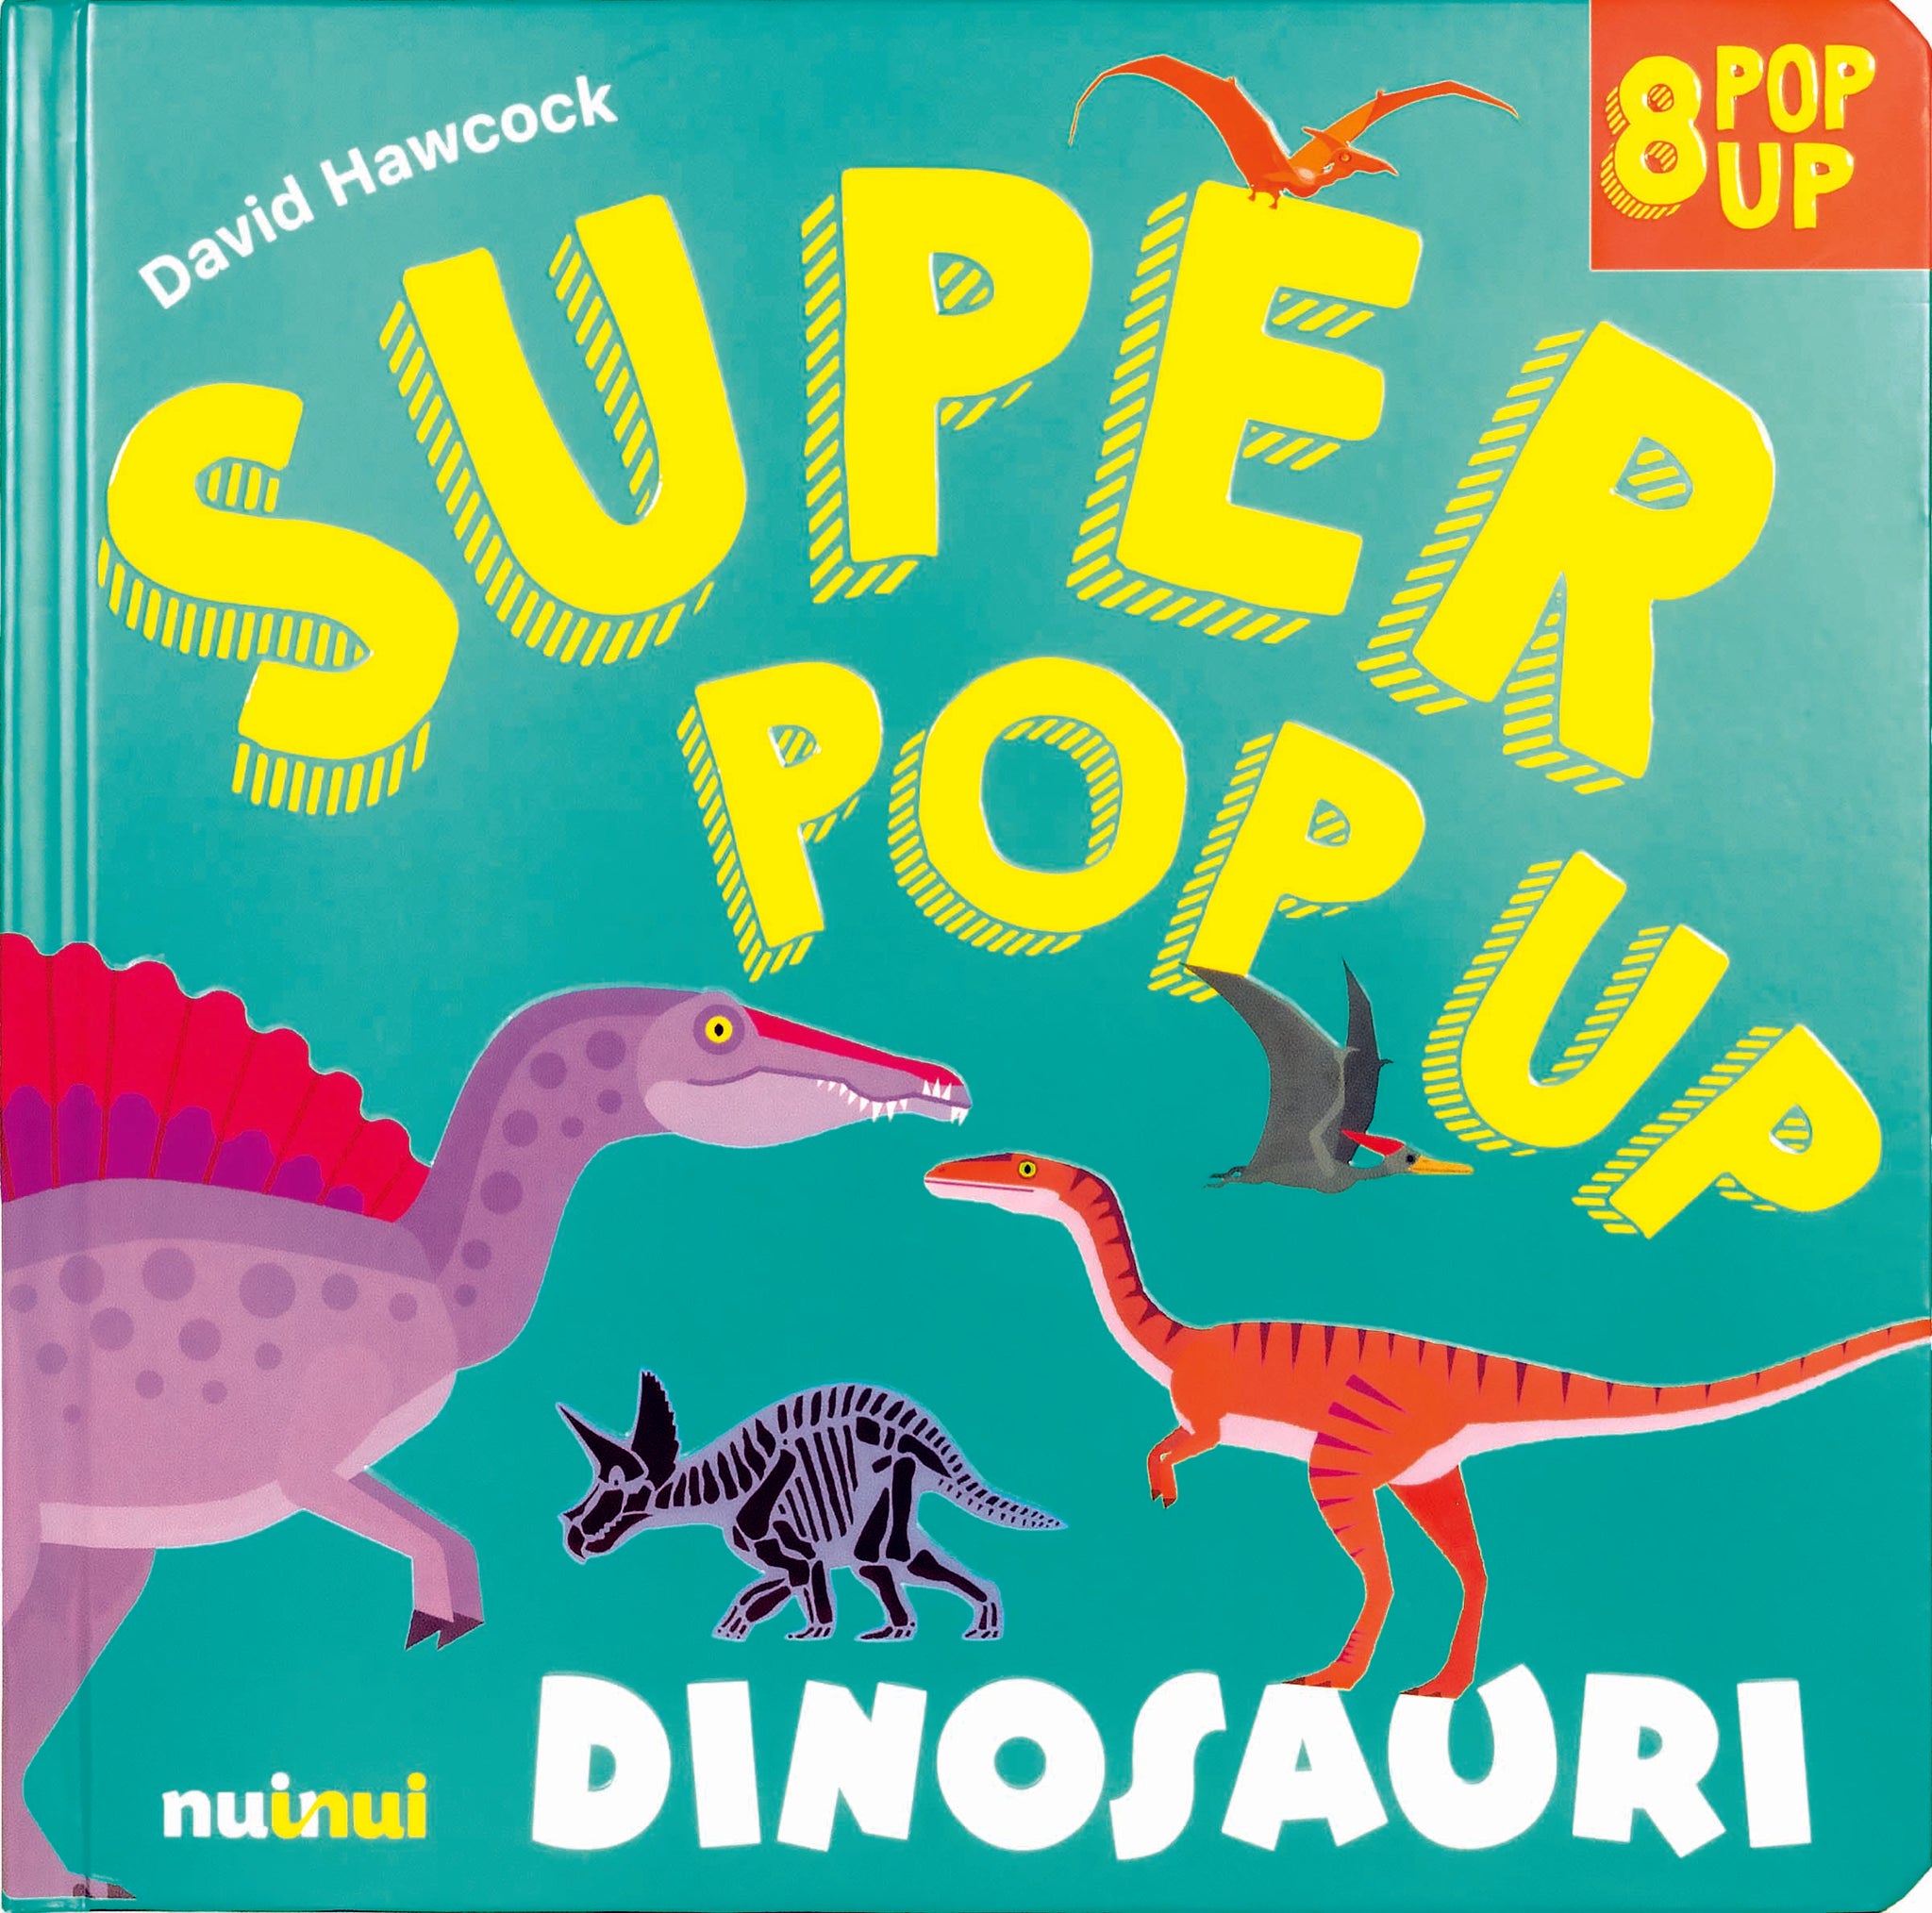 Super pop up - Dinosauri